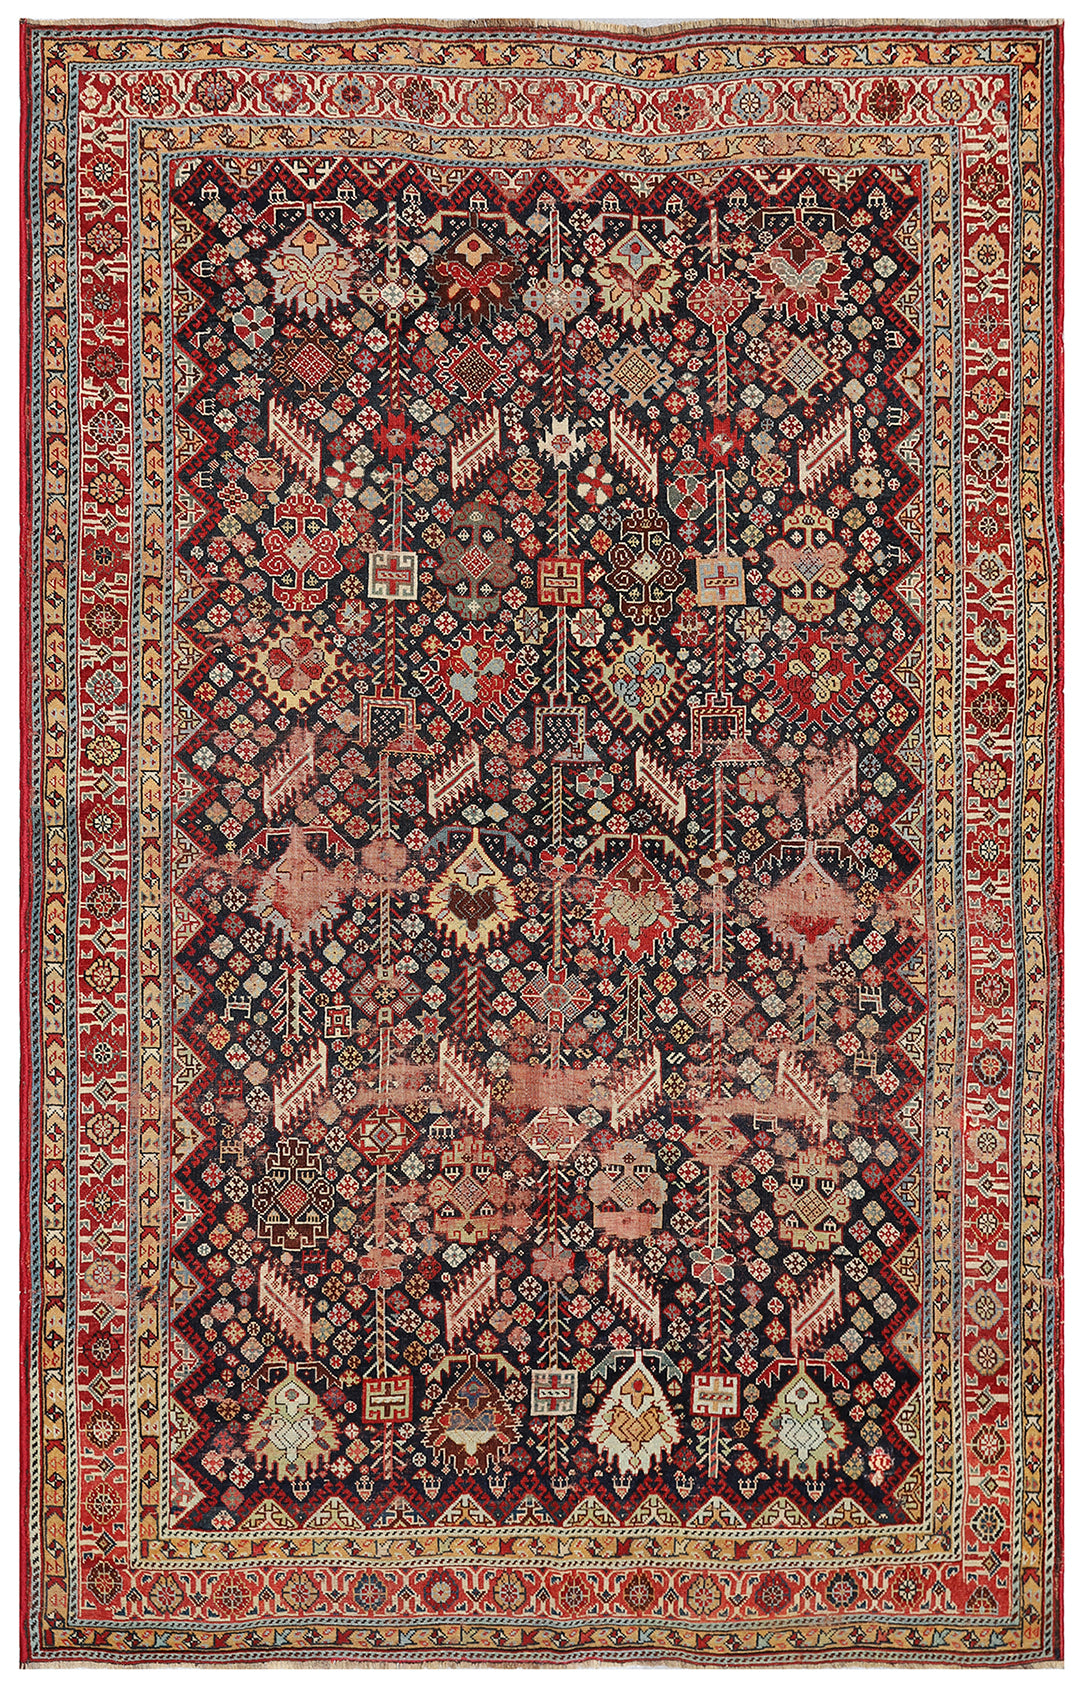 6'x9' Antique Tribal Persian Qashqai Rug